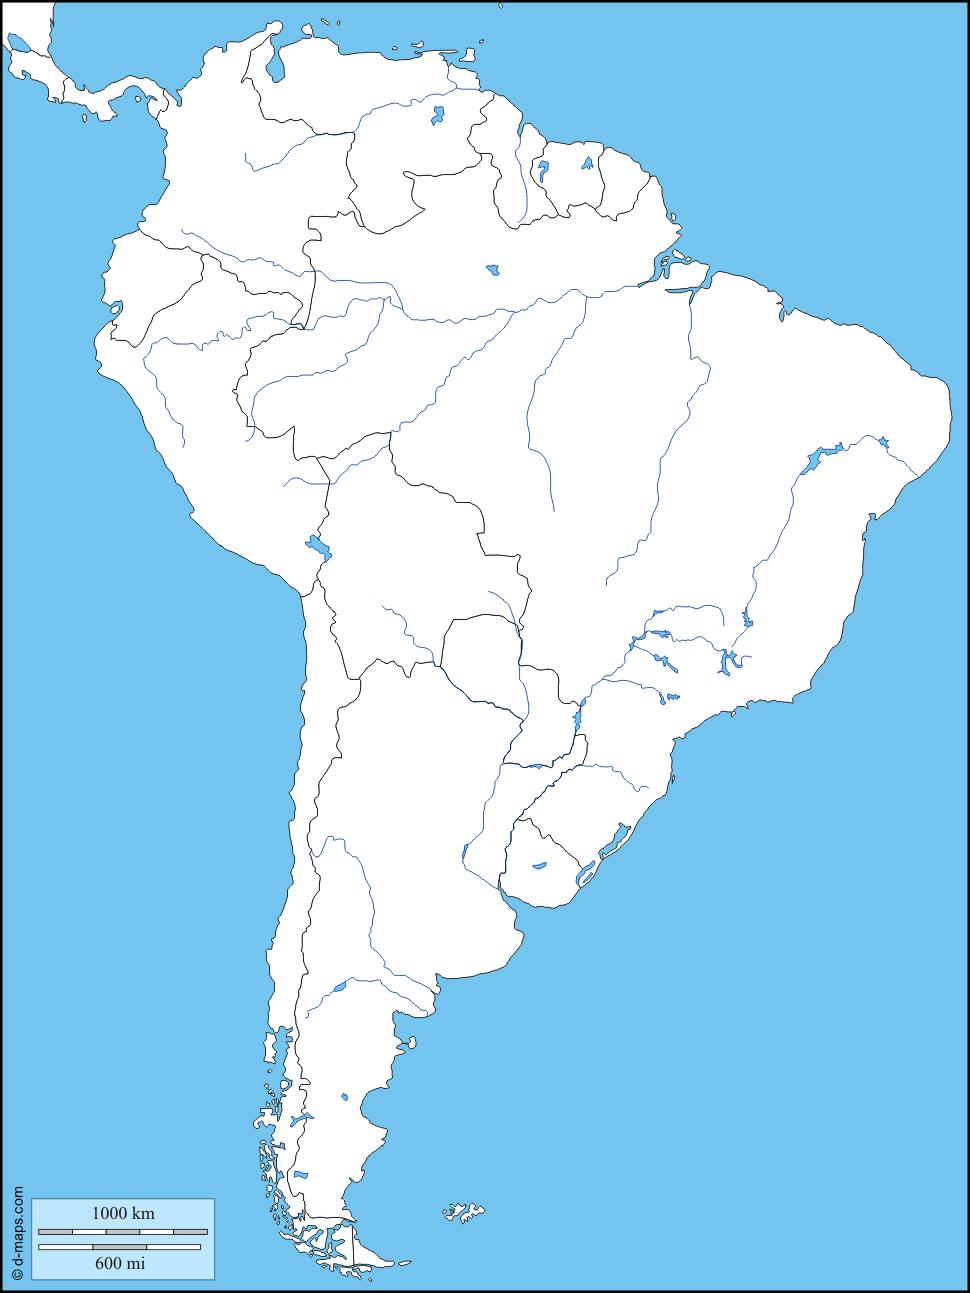 Amazon River (Blue) 7. Equator 8. Atacama Desert (Yellow) 9. Tierra del Fuego 10. Strait of Magellan 11.